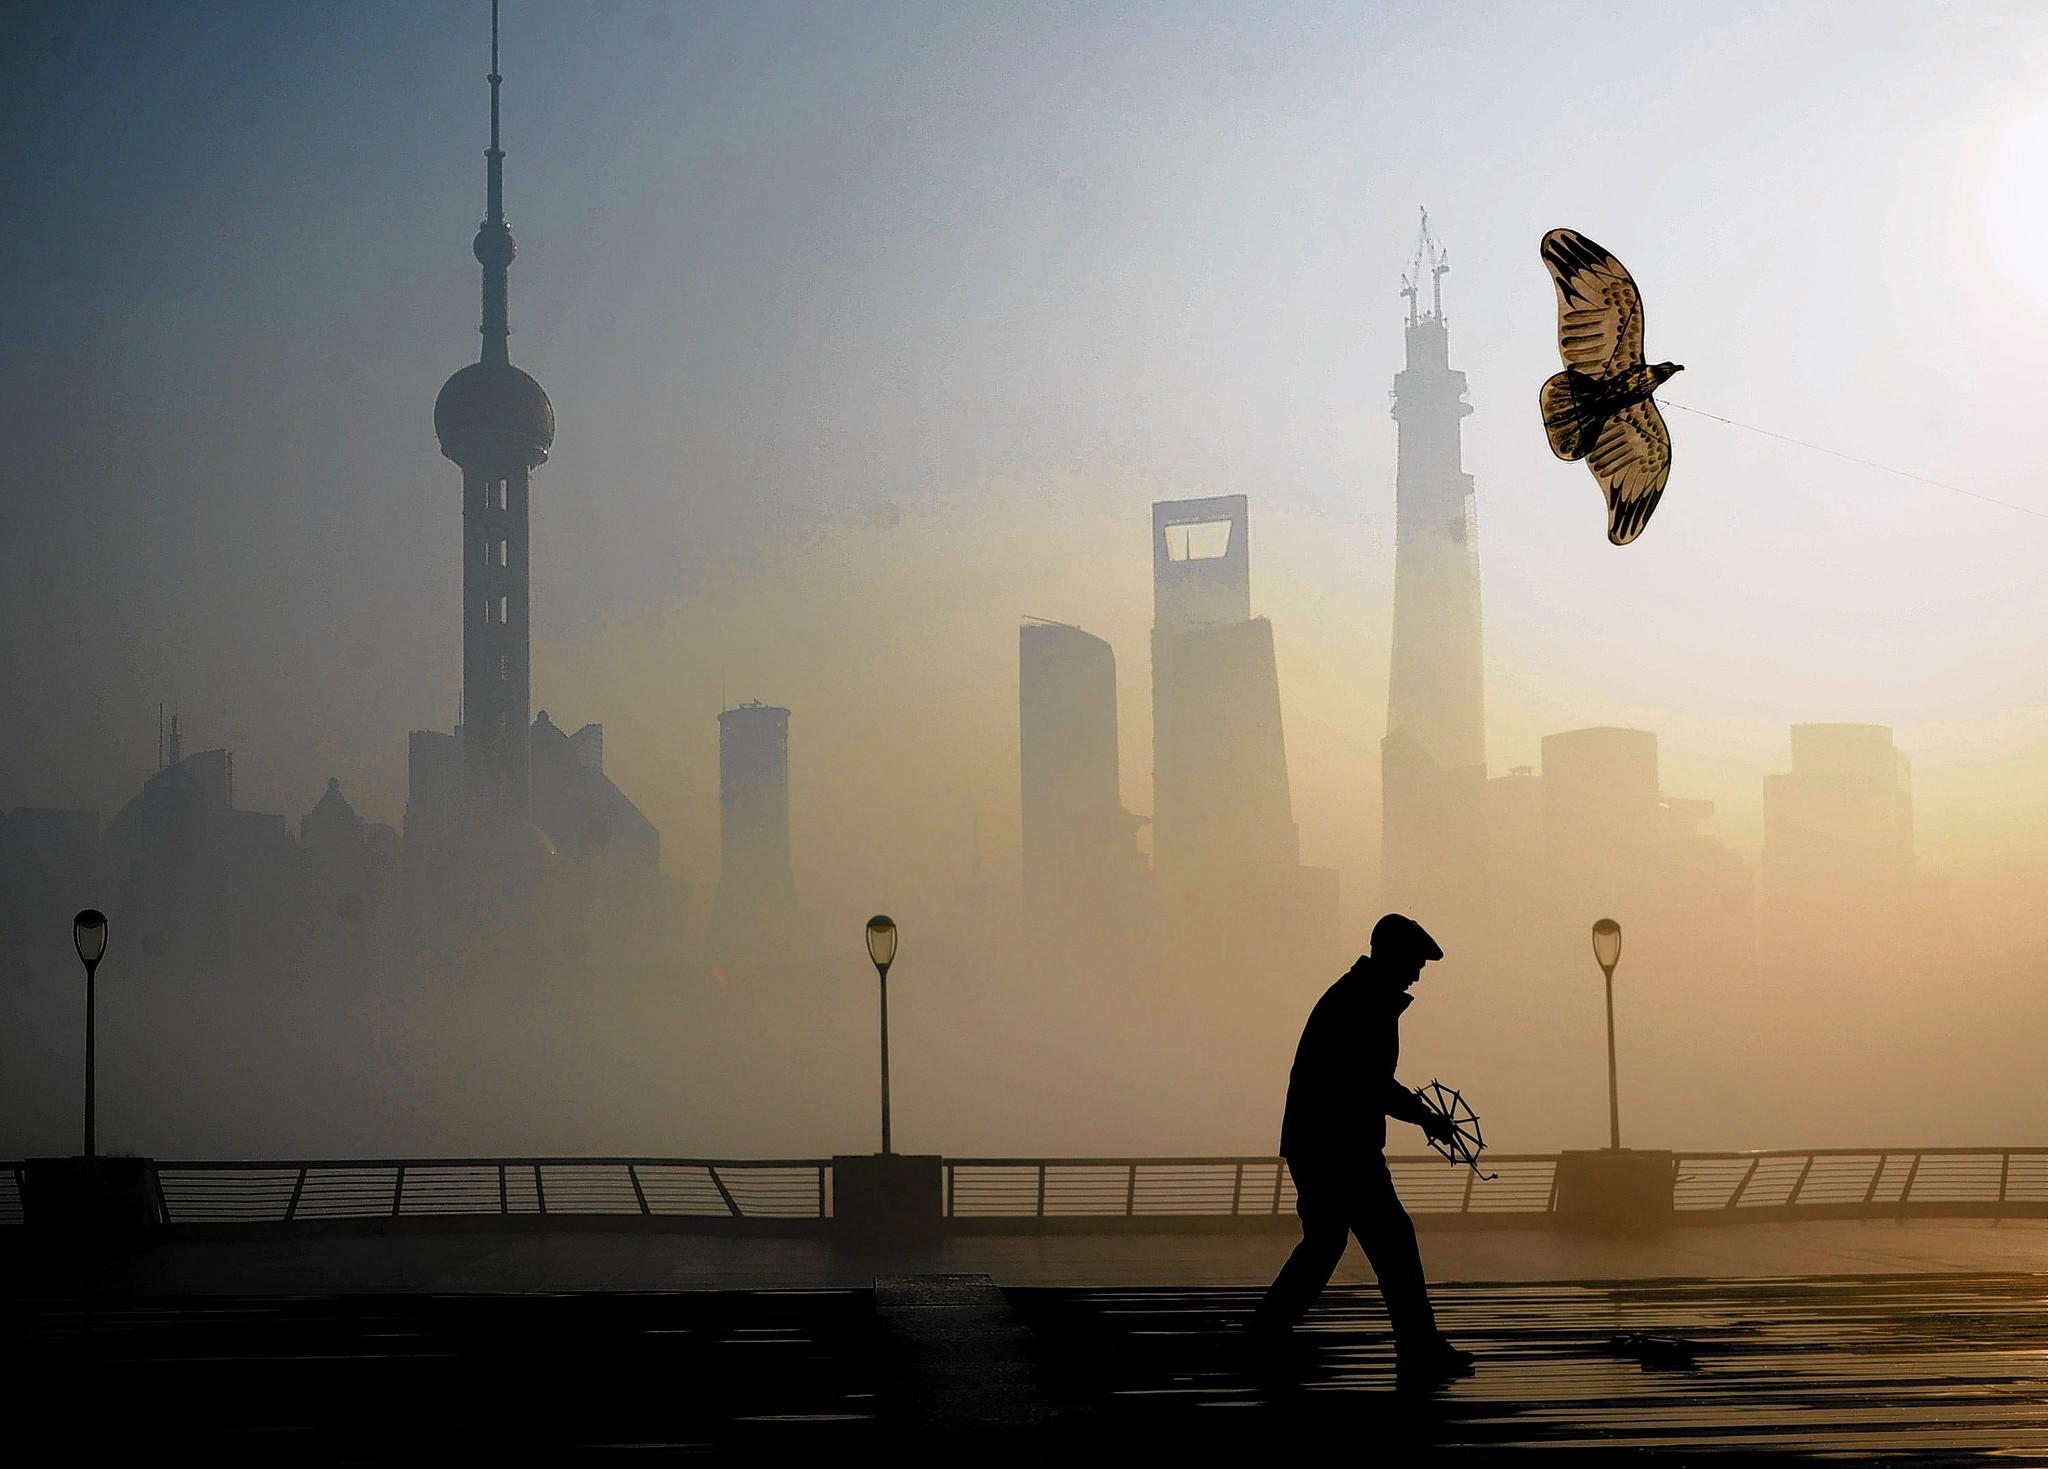 la-afp-getty-heavy-smog-hits-east-china-jpg-20131223.jpg